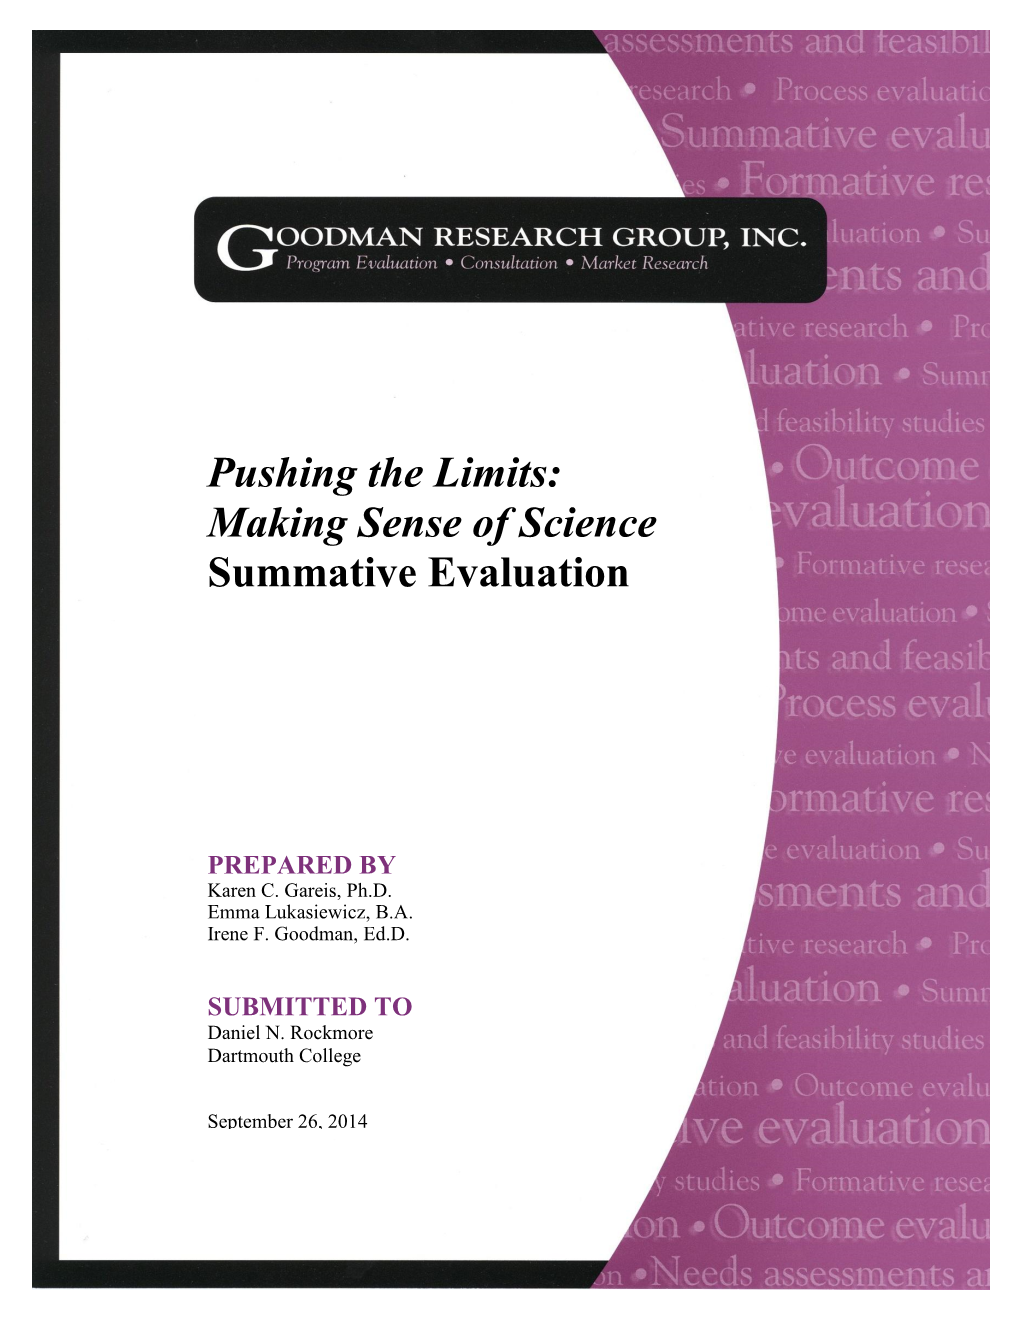 Pushing the Limits: Making Sense of Science Summative Evaluation